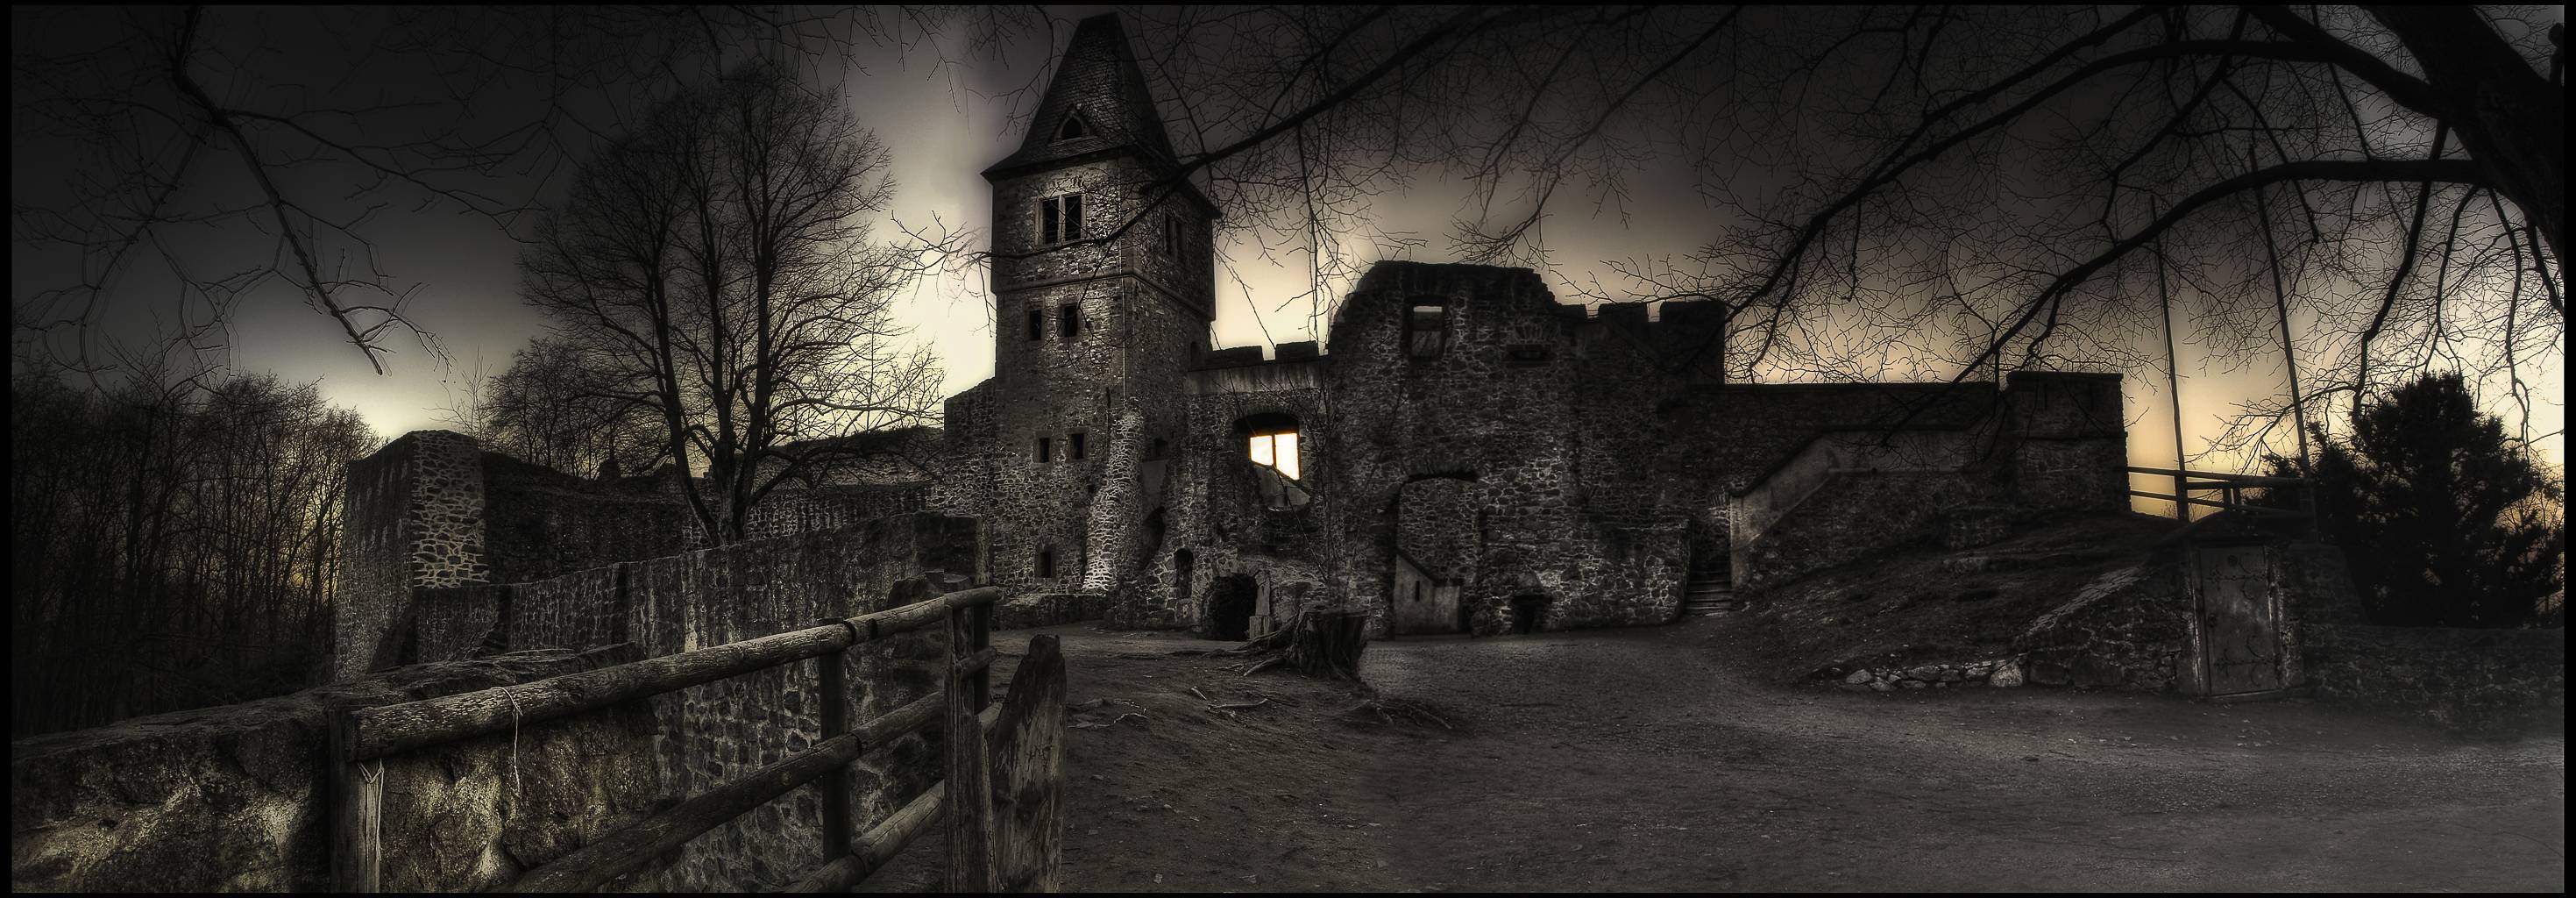 frankensteins_castle_panorama_by_riot23.jpg